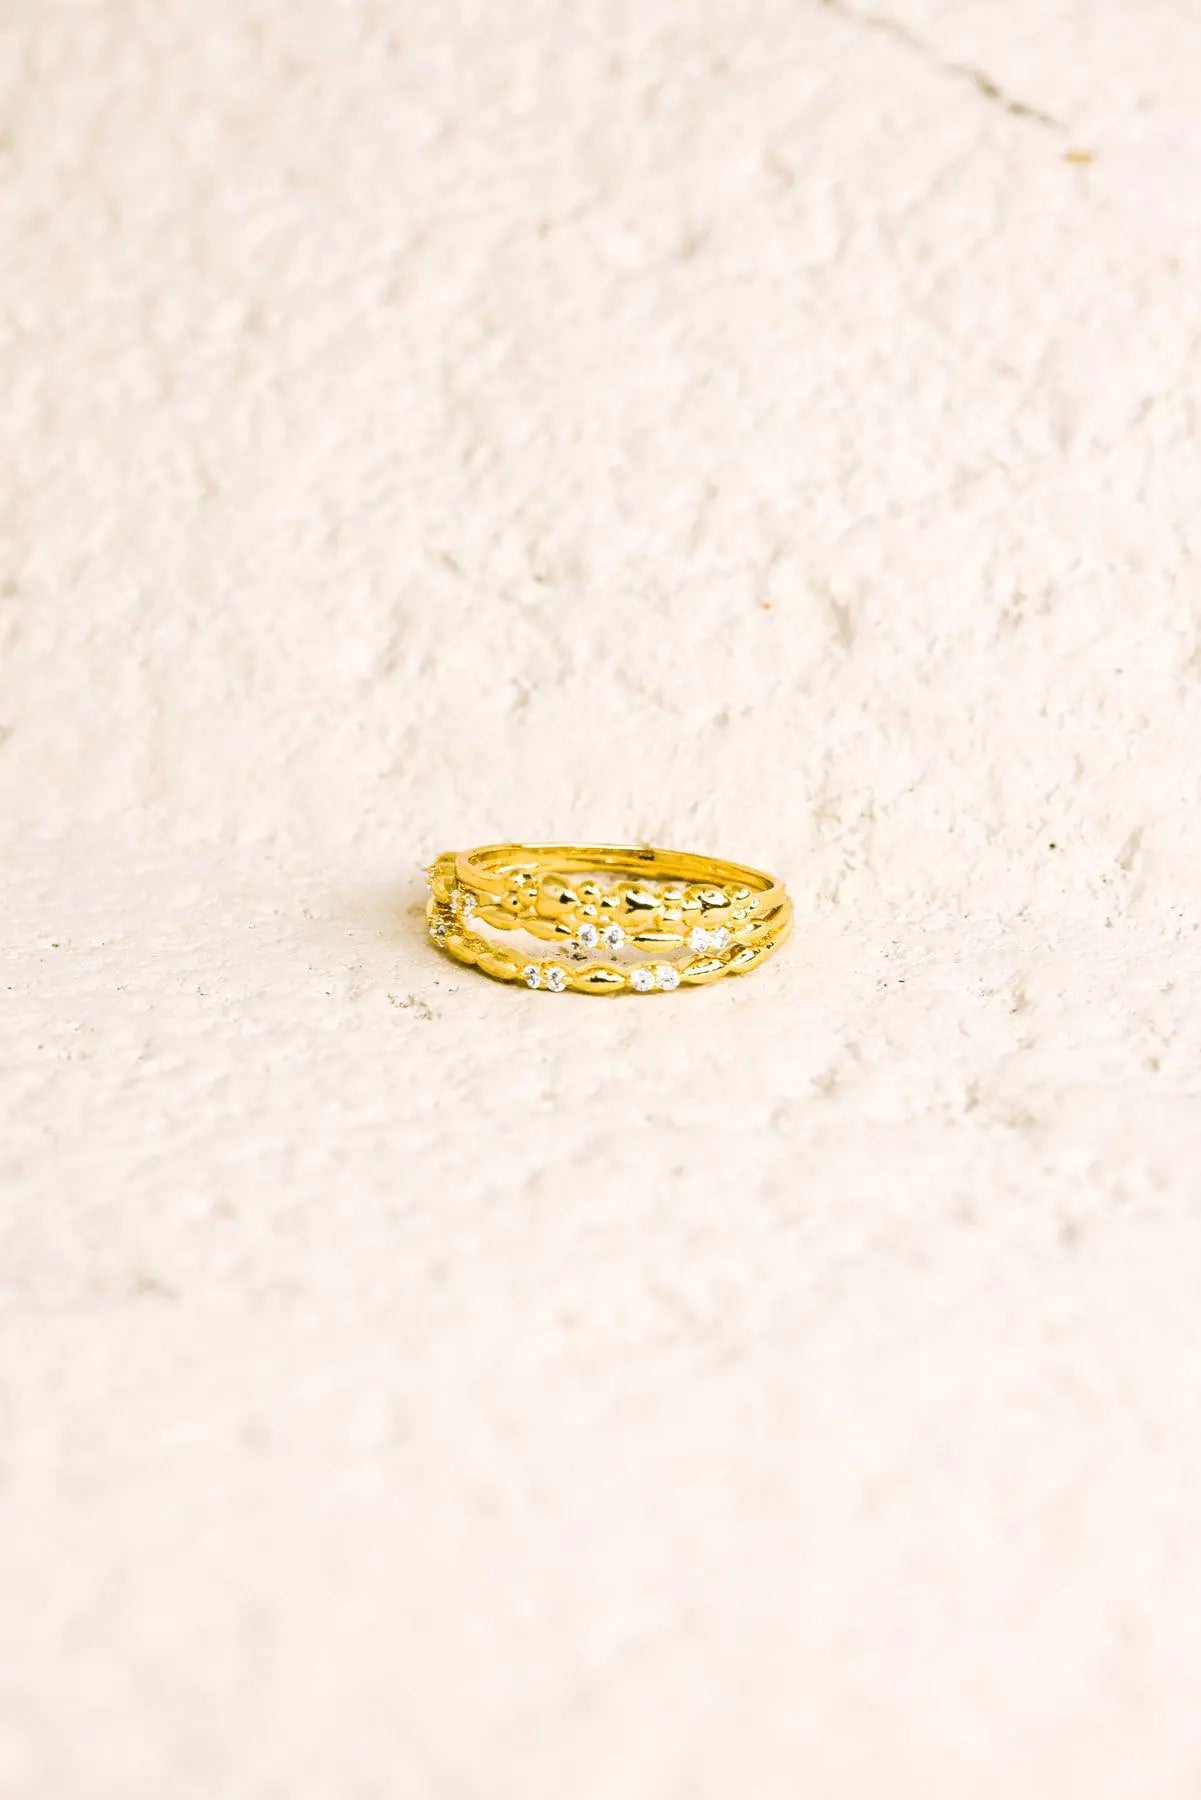 Two Gold Rhinestone Piece Delicate Fashion Ring Set